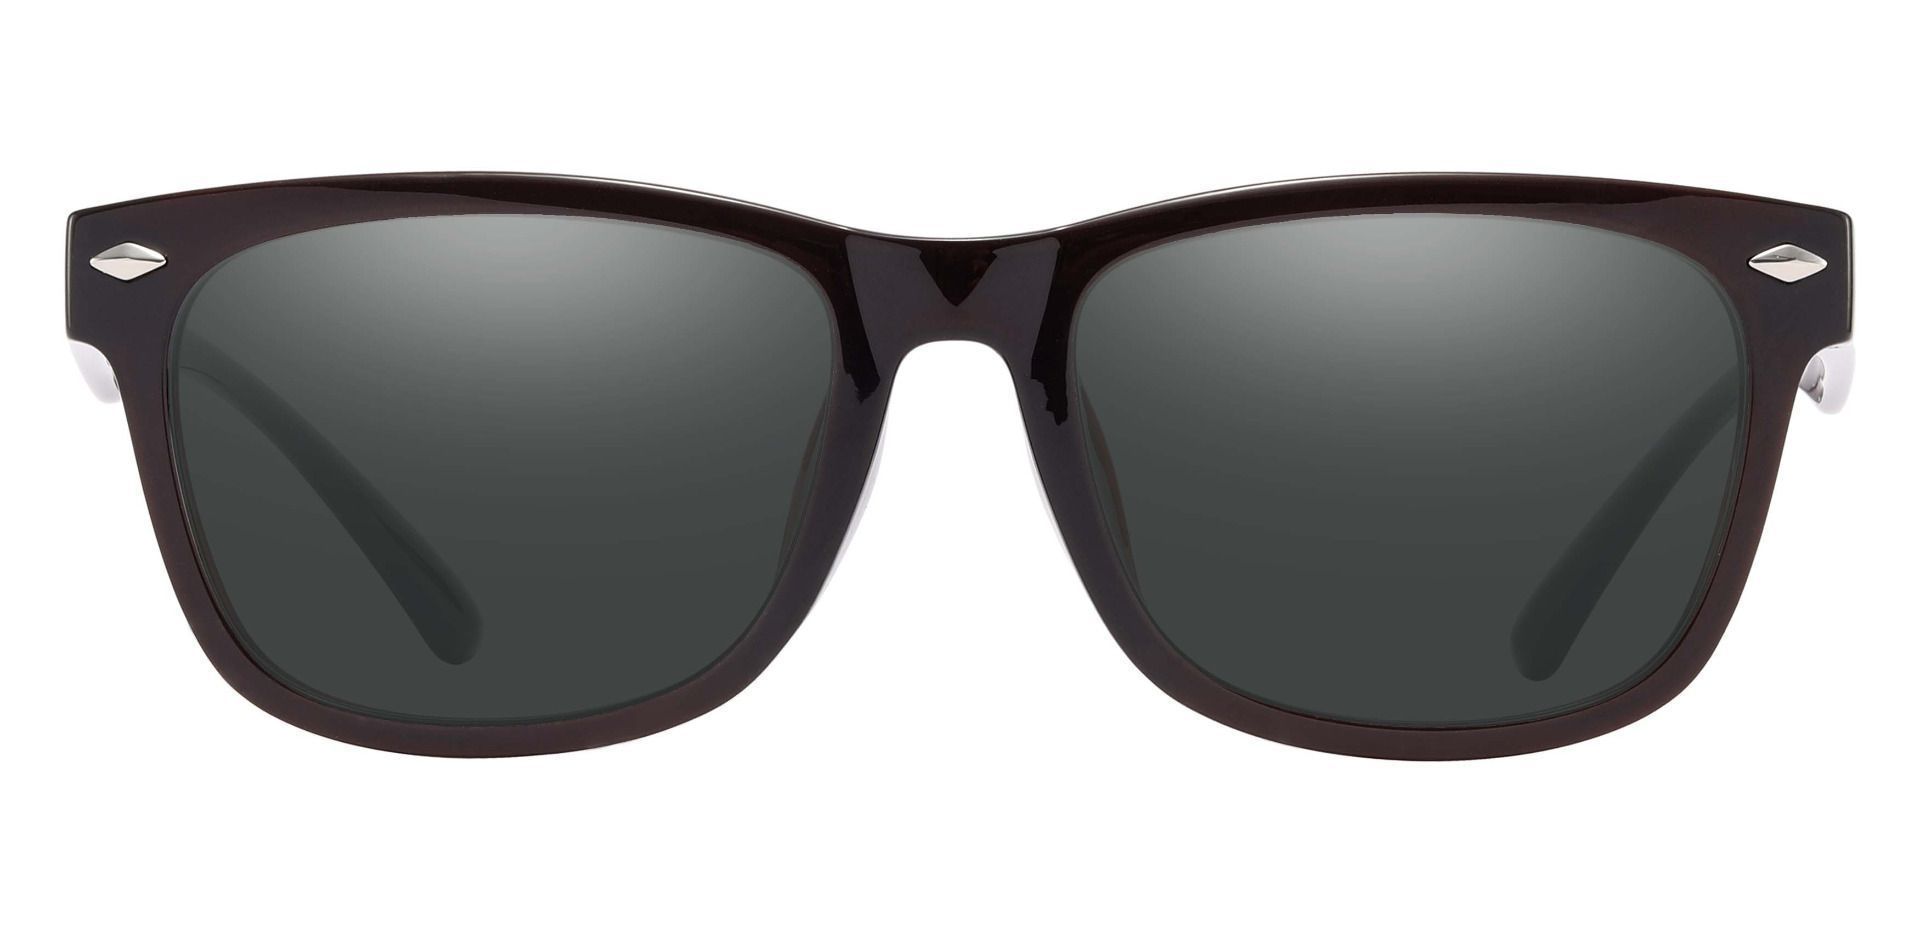 Shaler Square Reading Sunglasses - Red Frame With Gray Lenses